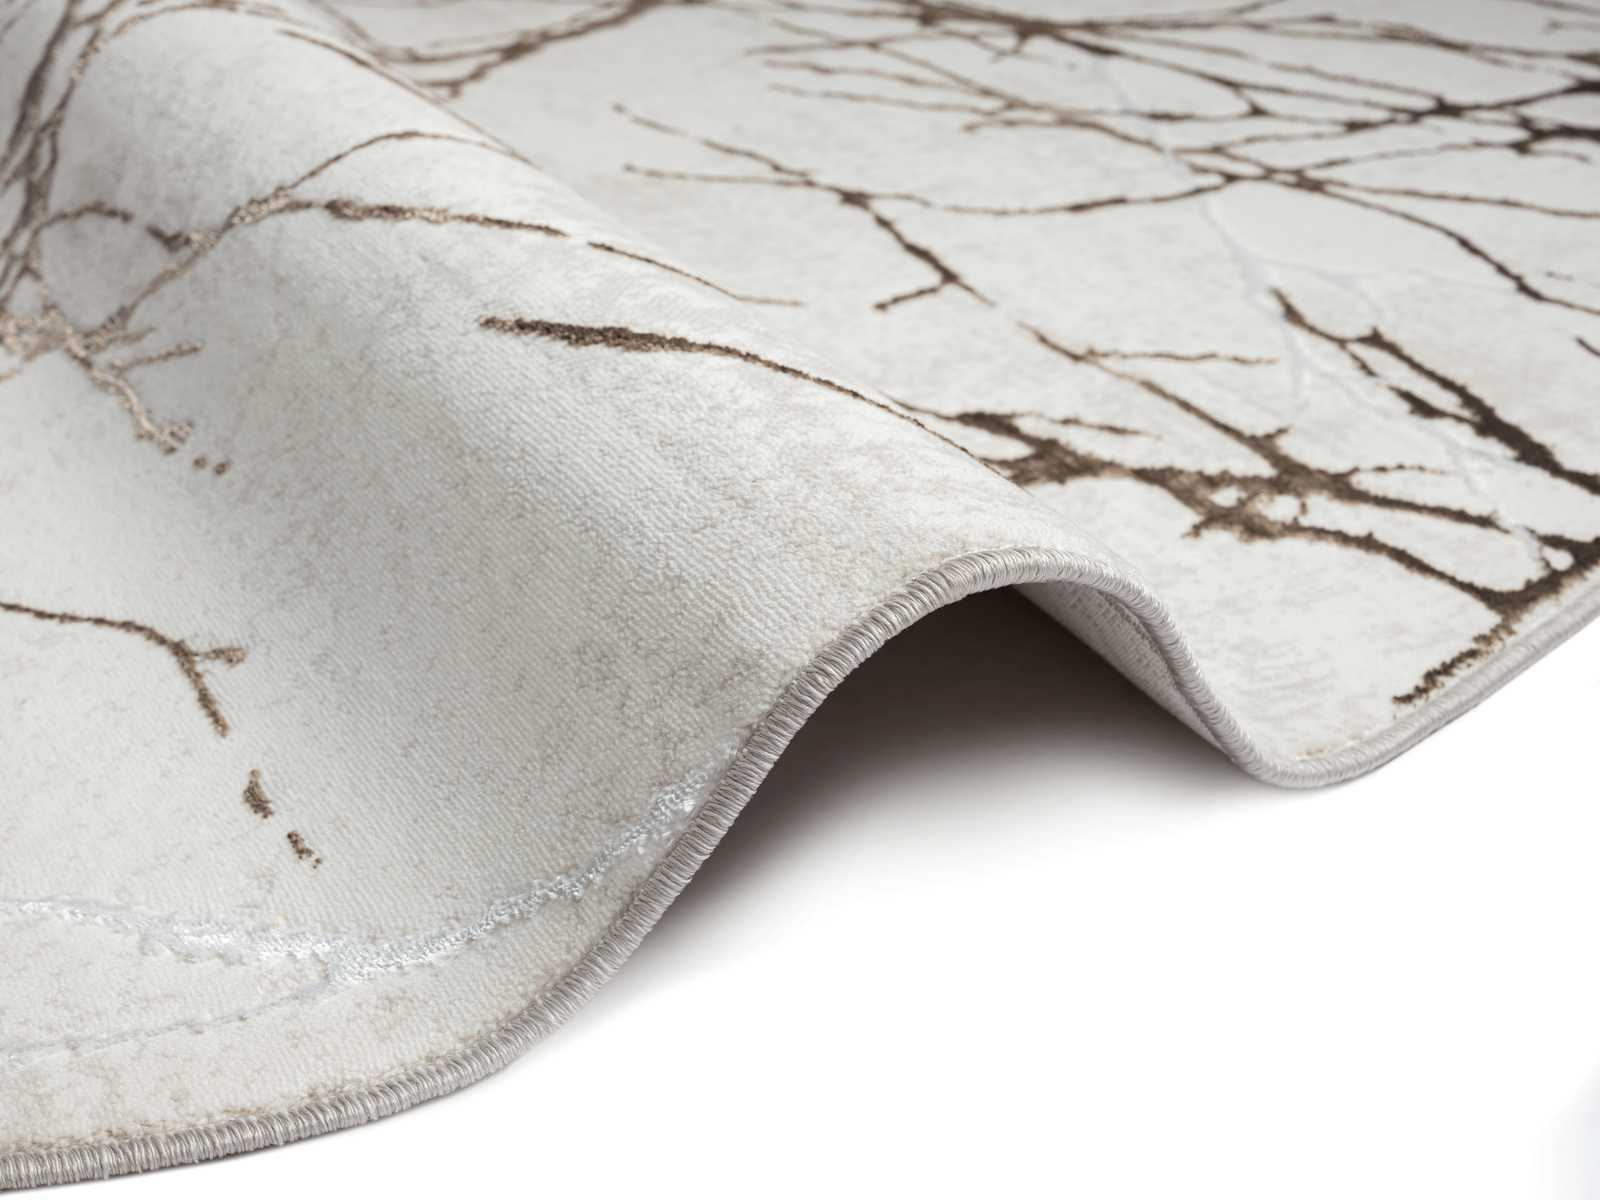             Fluffy high pile carpet in cream - 150 x 80 cm
        